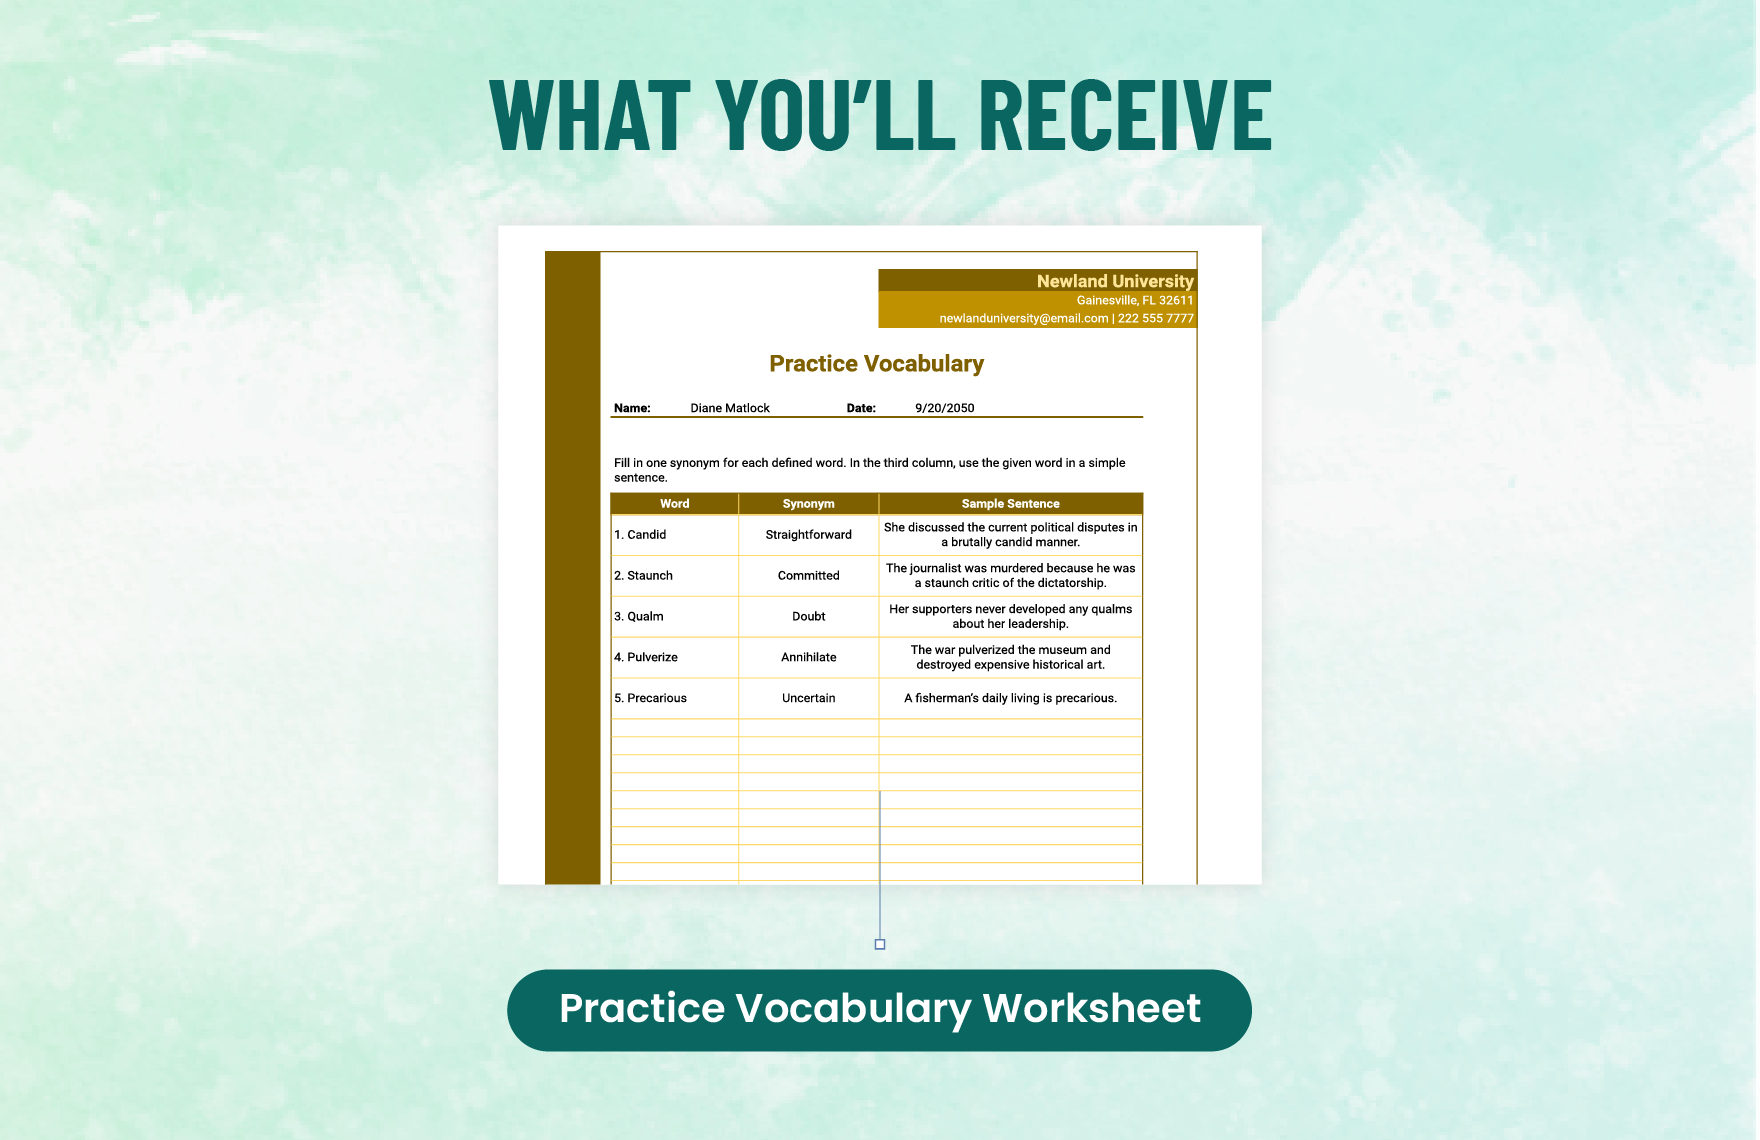 Practice Vocabulary Worksheet Template